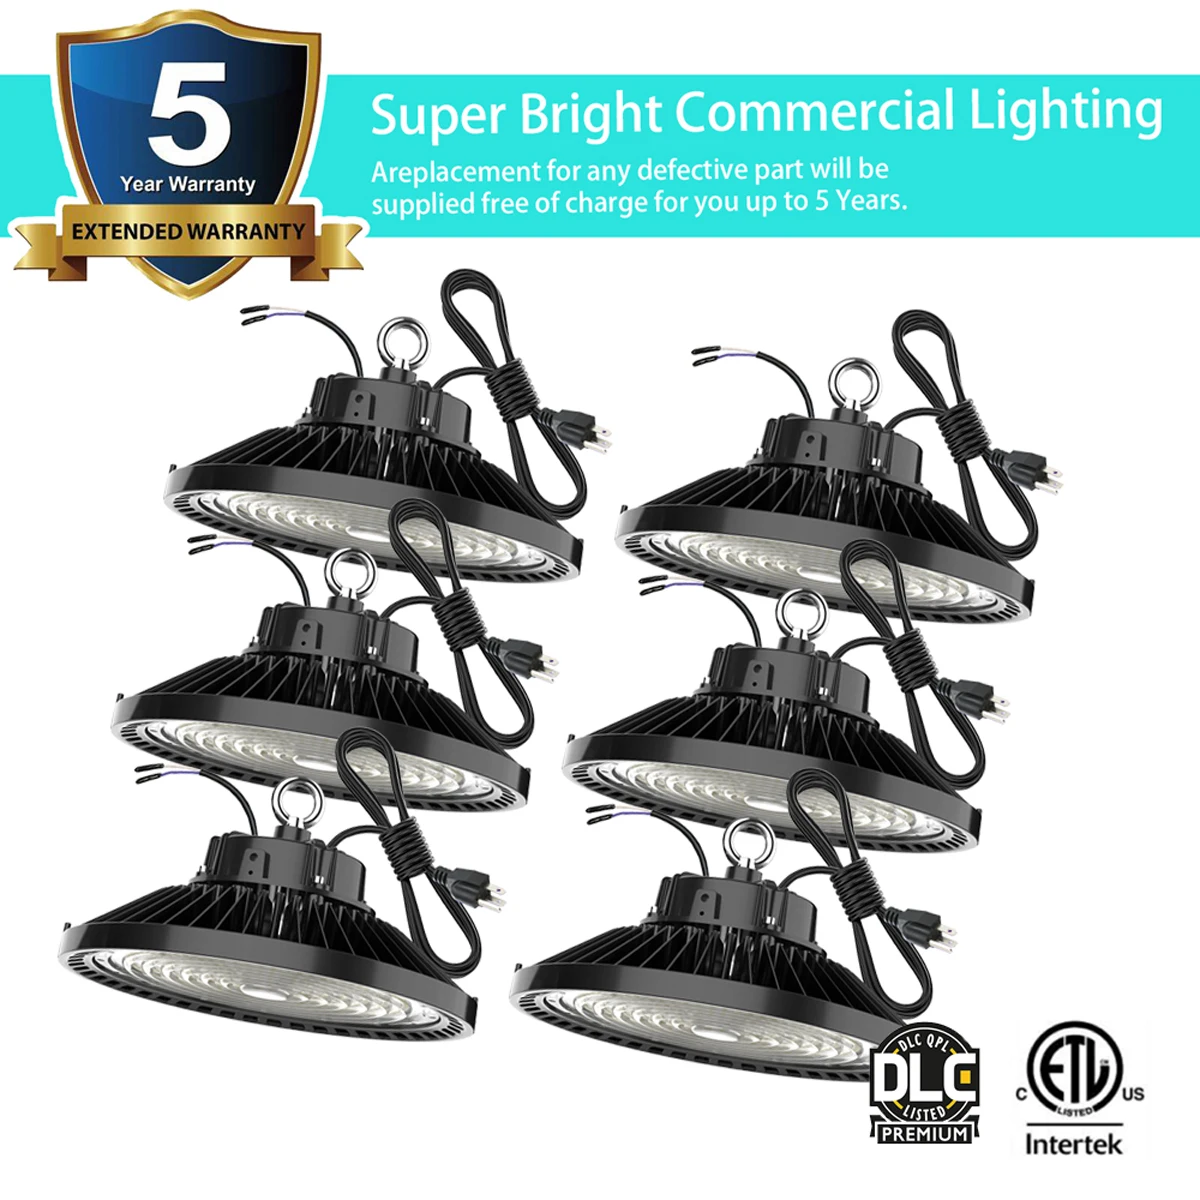 

6 Pack 150W UFO Led High Bay Light 5000K 1-10V Dimmable Commercial Industrial Warehouse Workshop Light 22500lm DLC ETL Listed